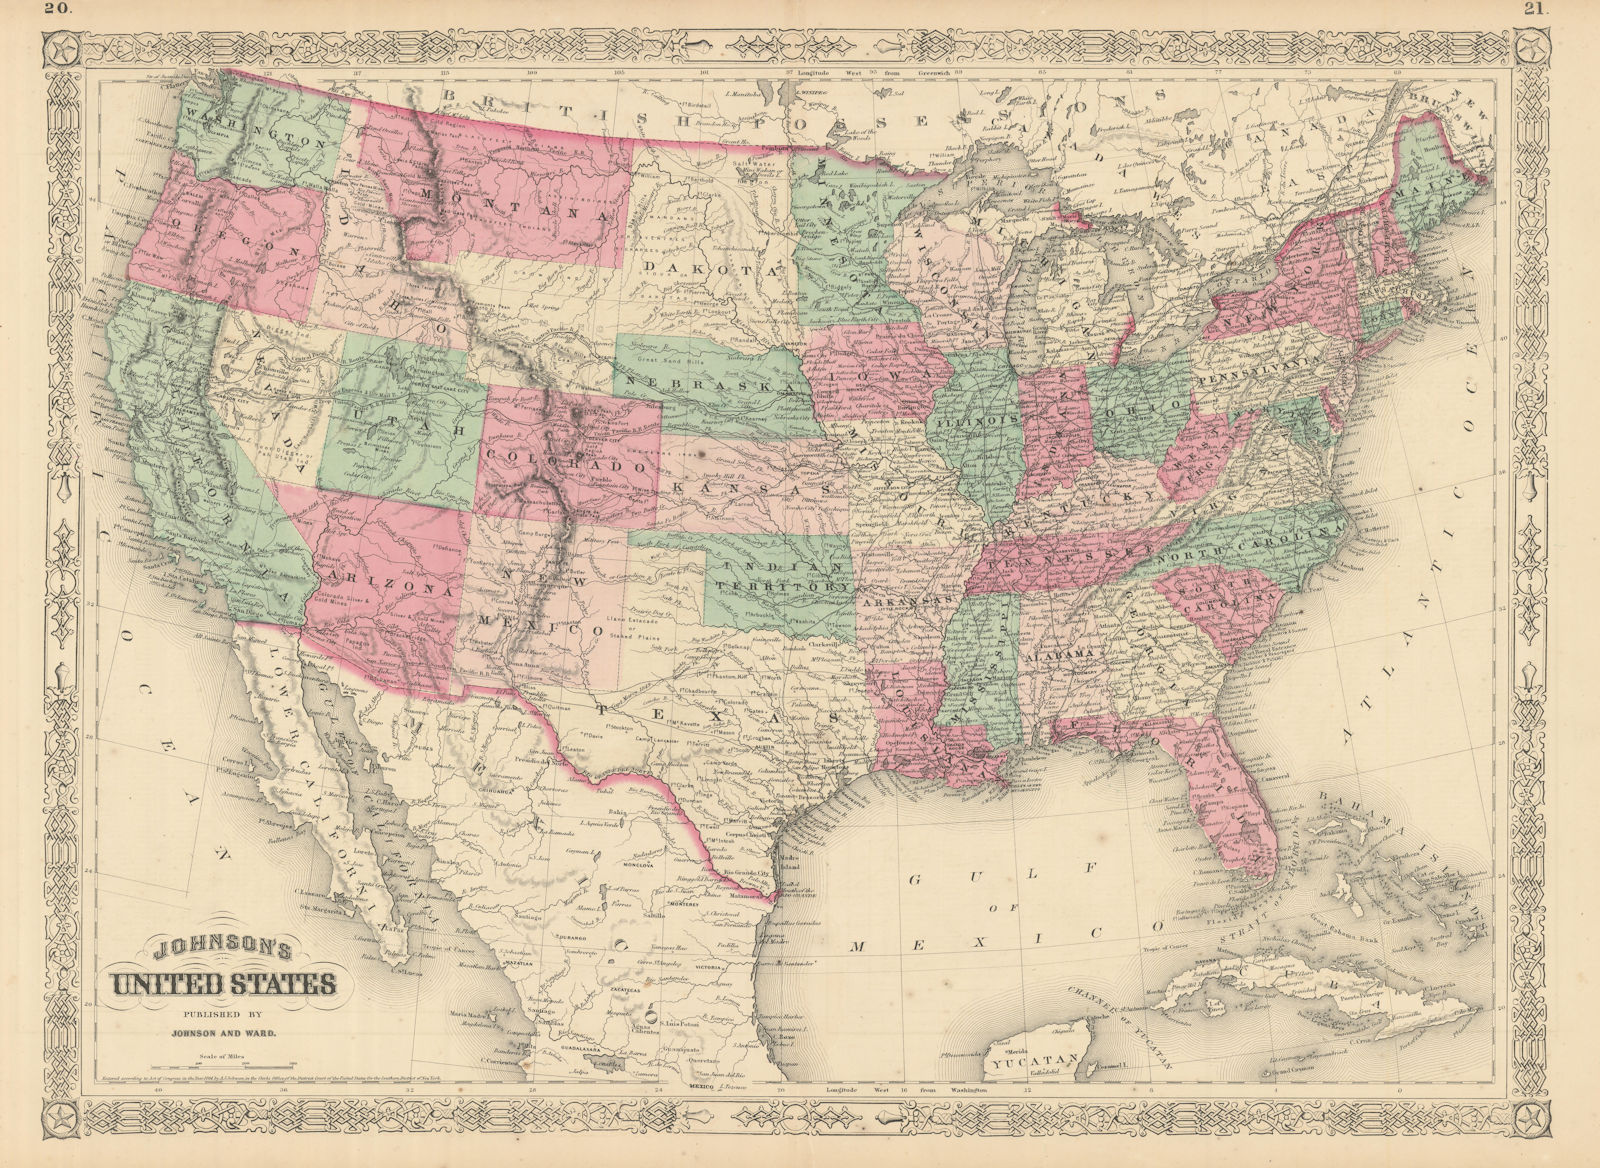 Associate Product Johnson's United States. Wyoming part of Dakota Territory 1866 old antique map